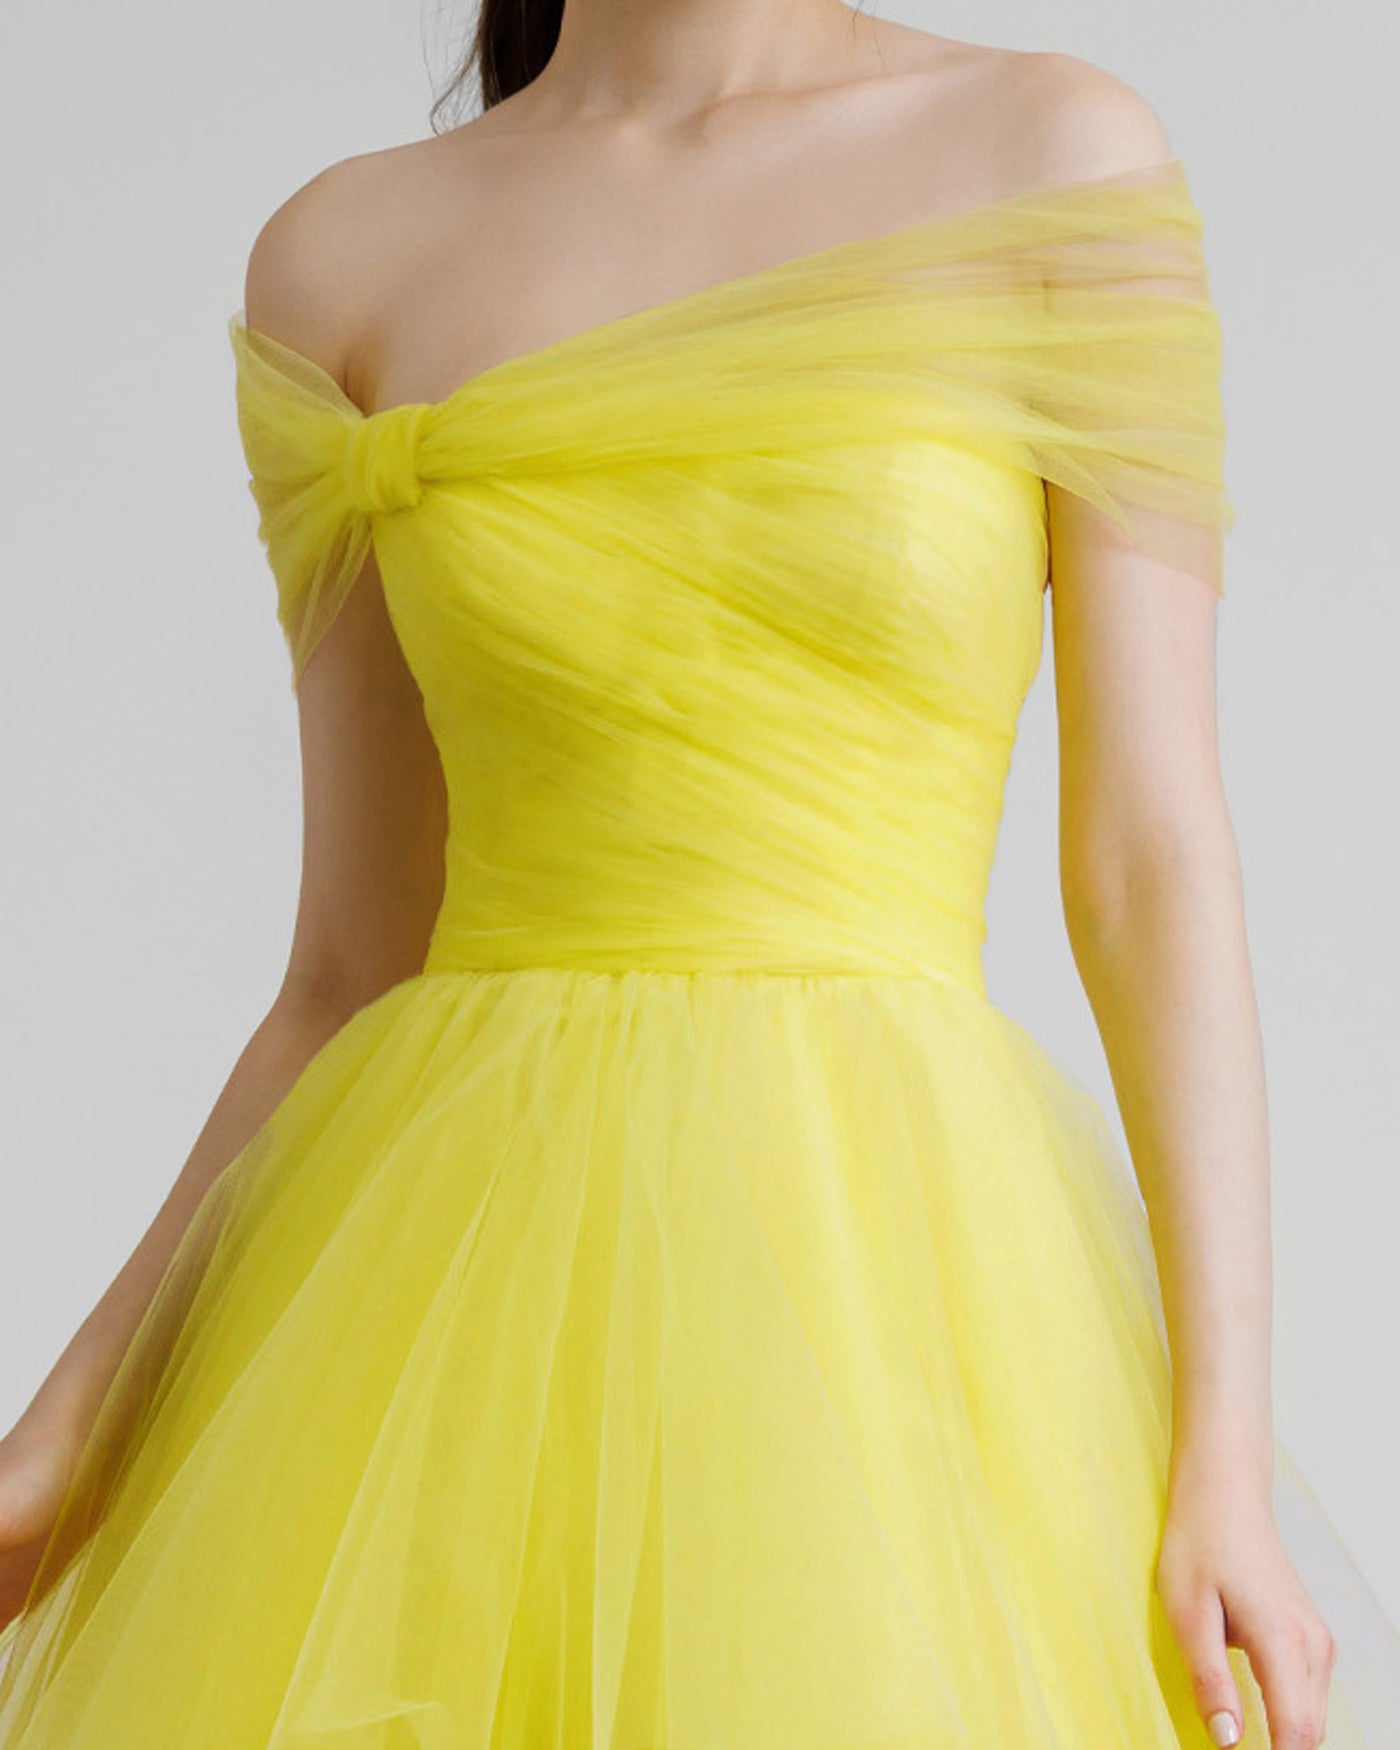 Asymmetrical Tulle Yellow Dress